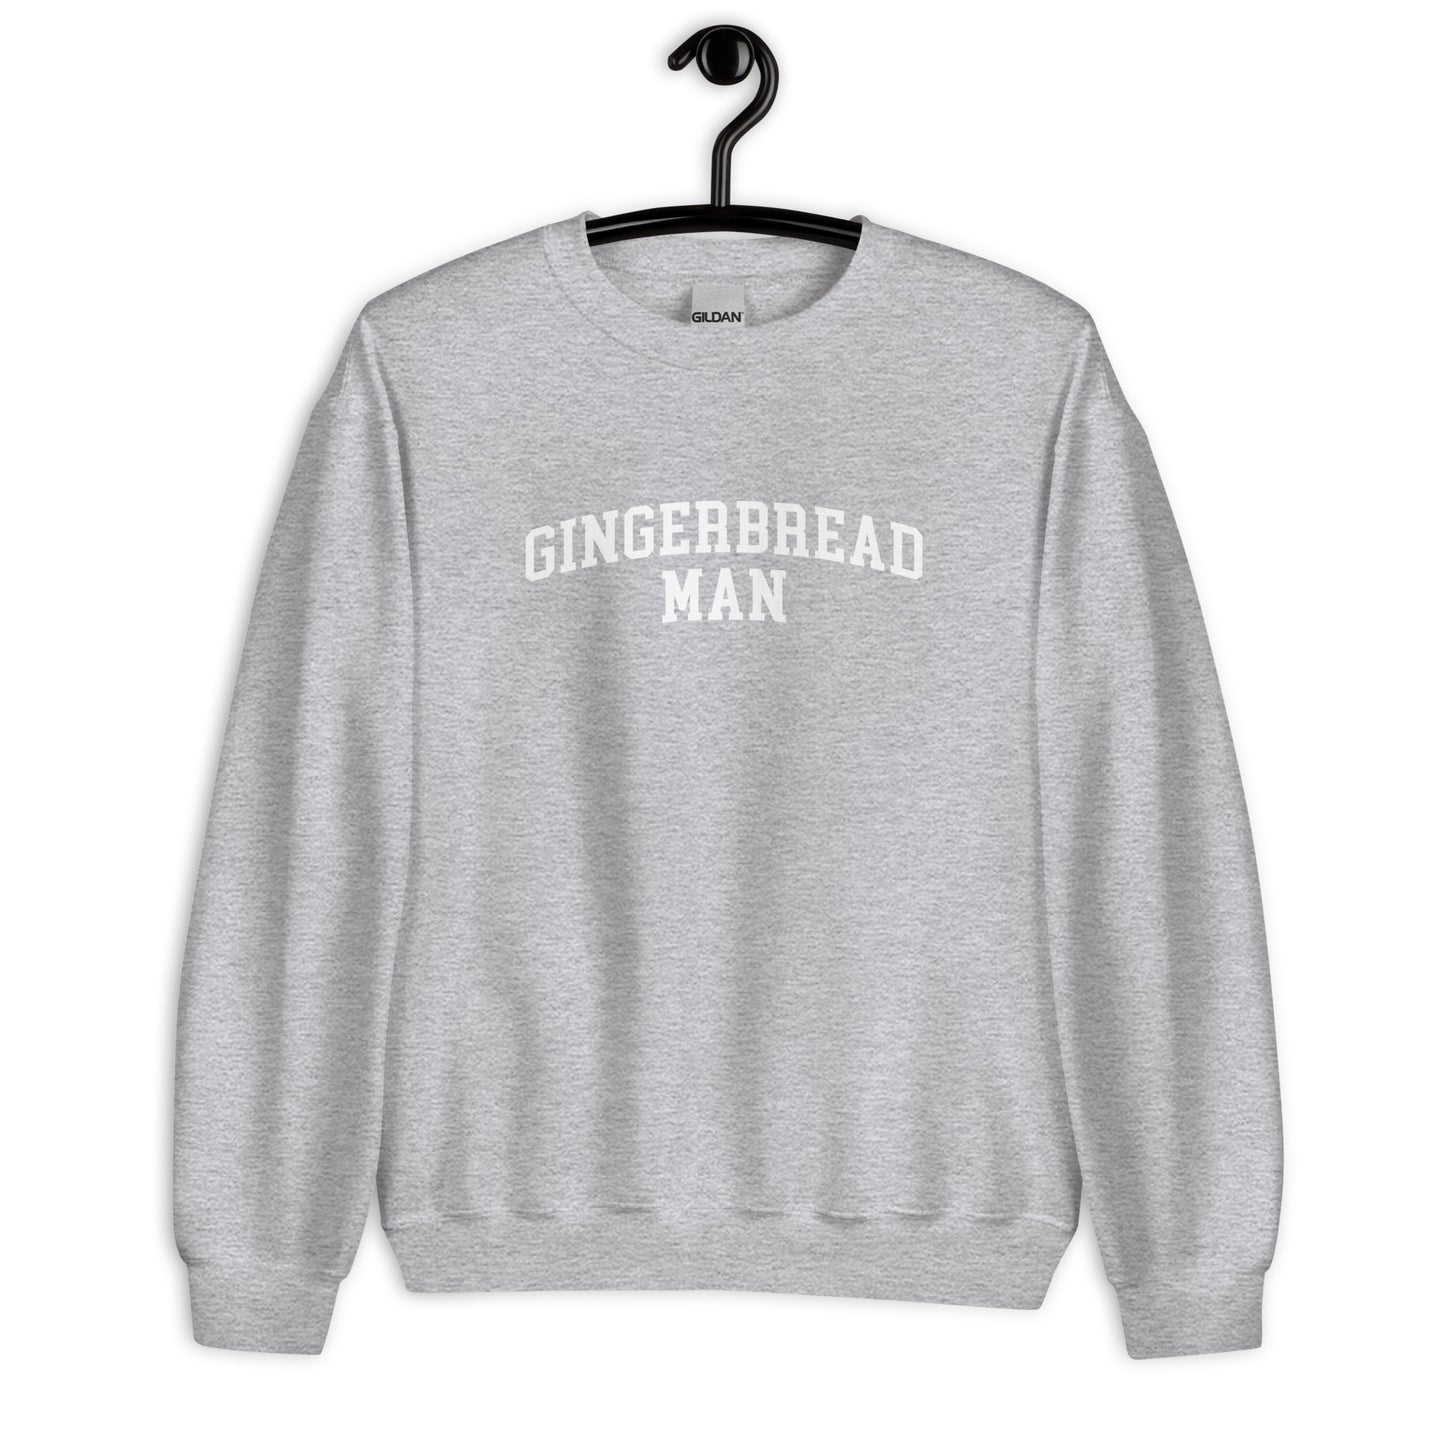 Gingerbread Man Sweatshirt - Arched Font